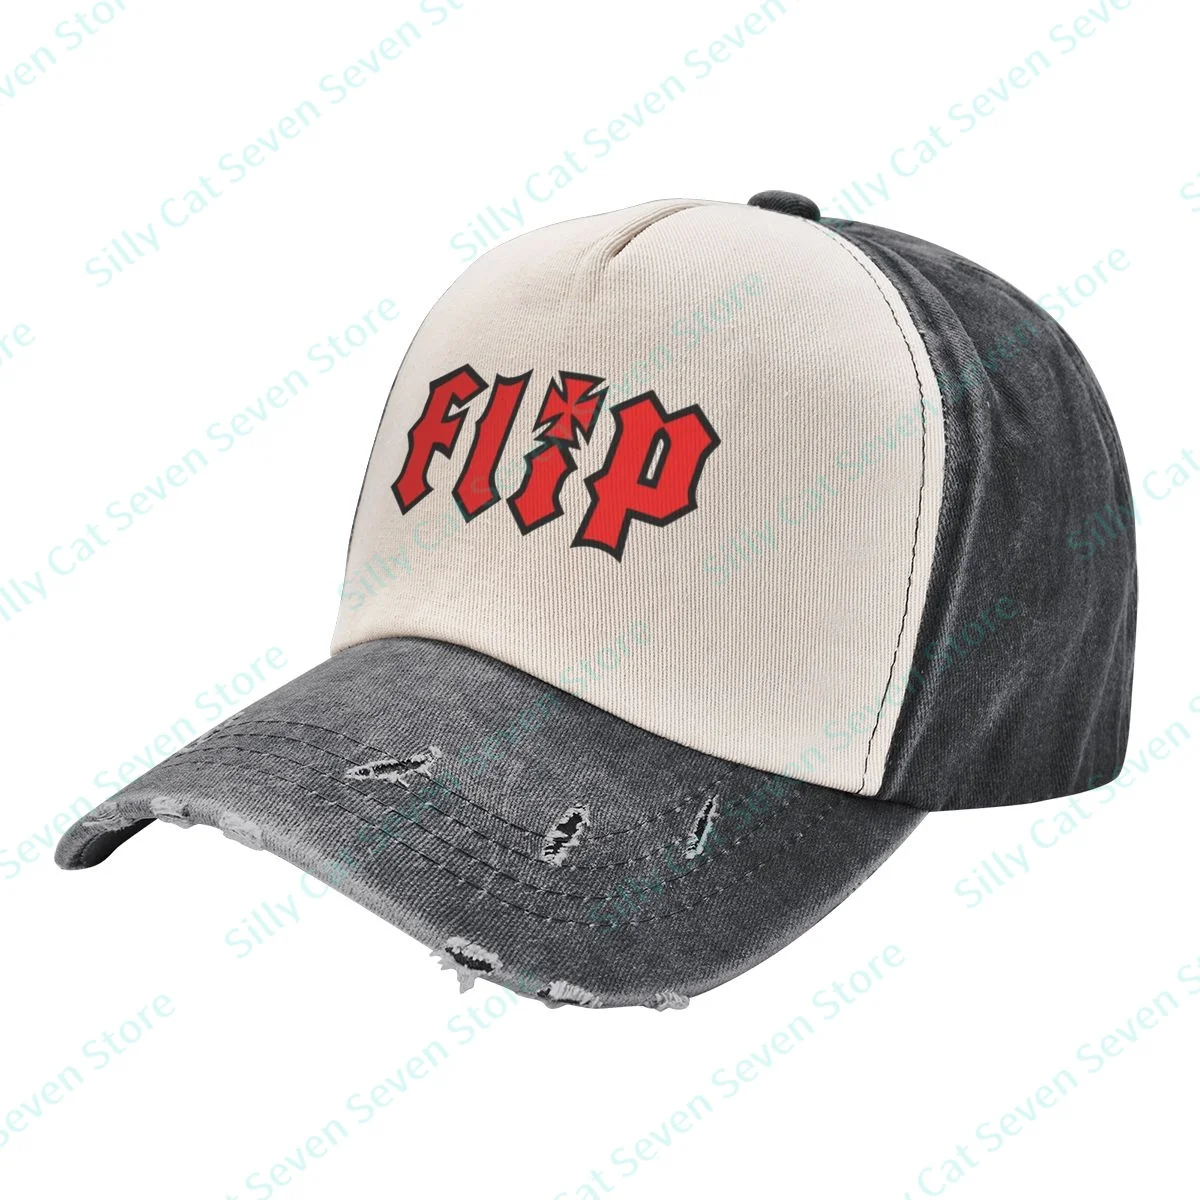 

Fashion Fllps cowboy Baseball Cap Men Women Vintage adjustable Mixed color stitching Baseball Cap Washed Dad Hat